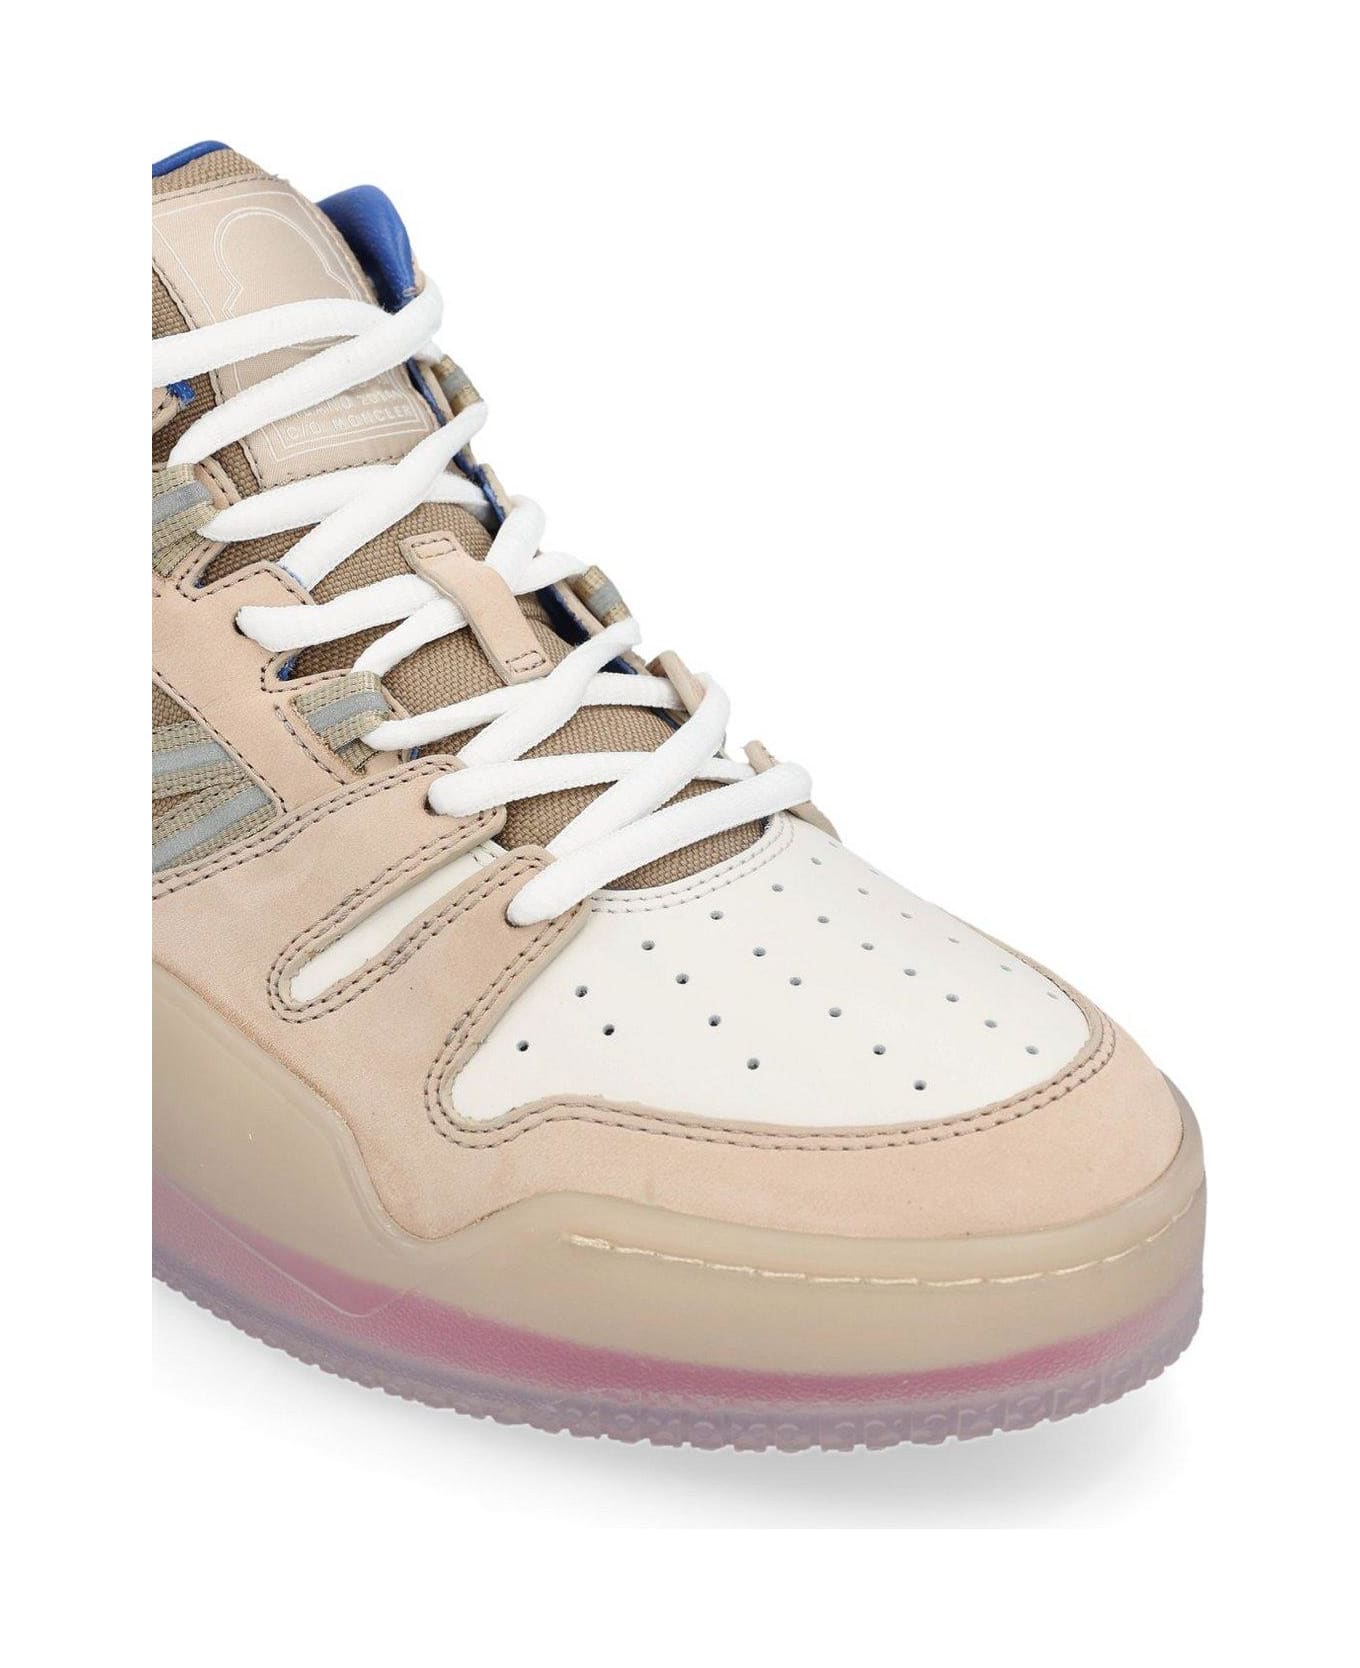 Moncler Pivot High Top Sneakers - Pink